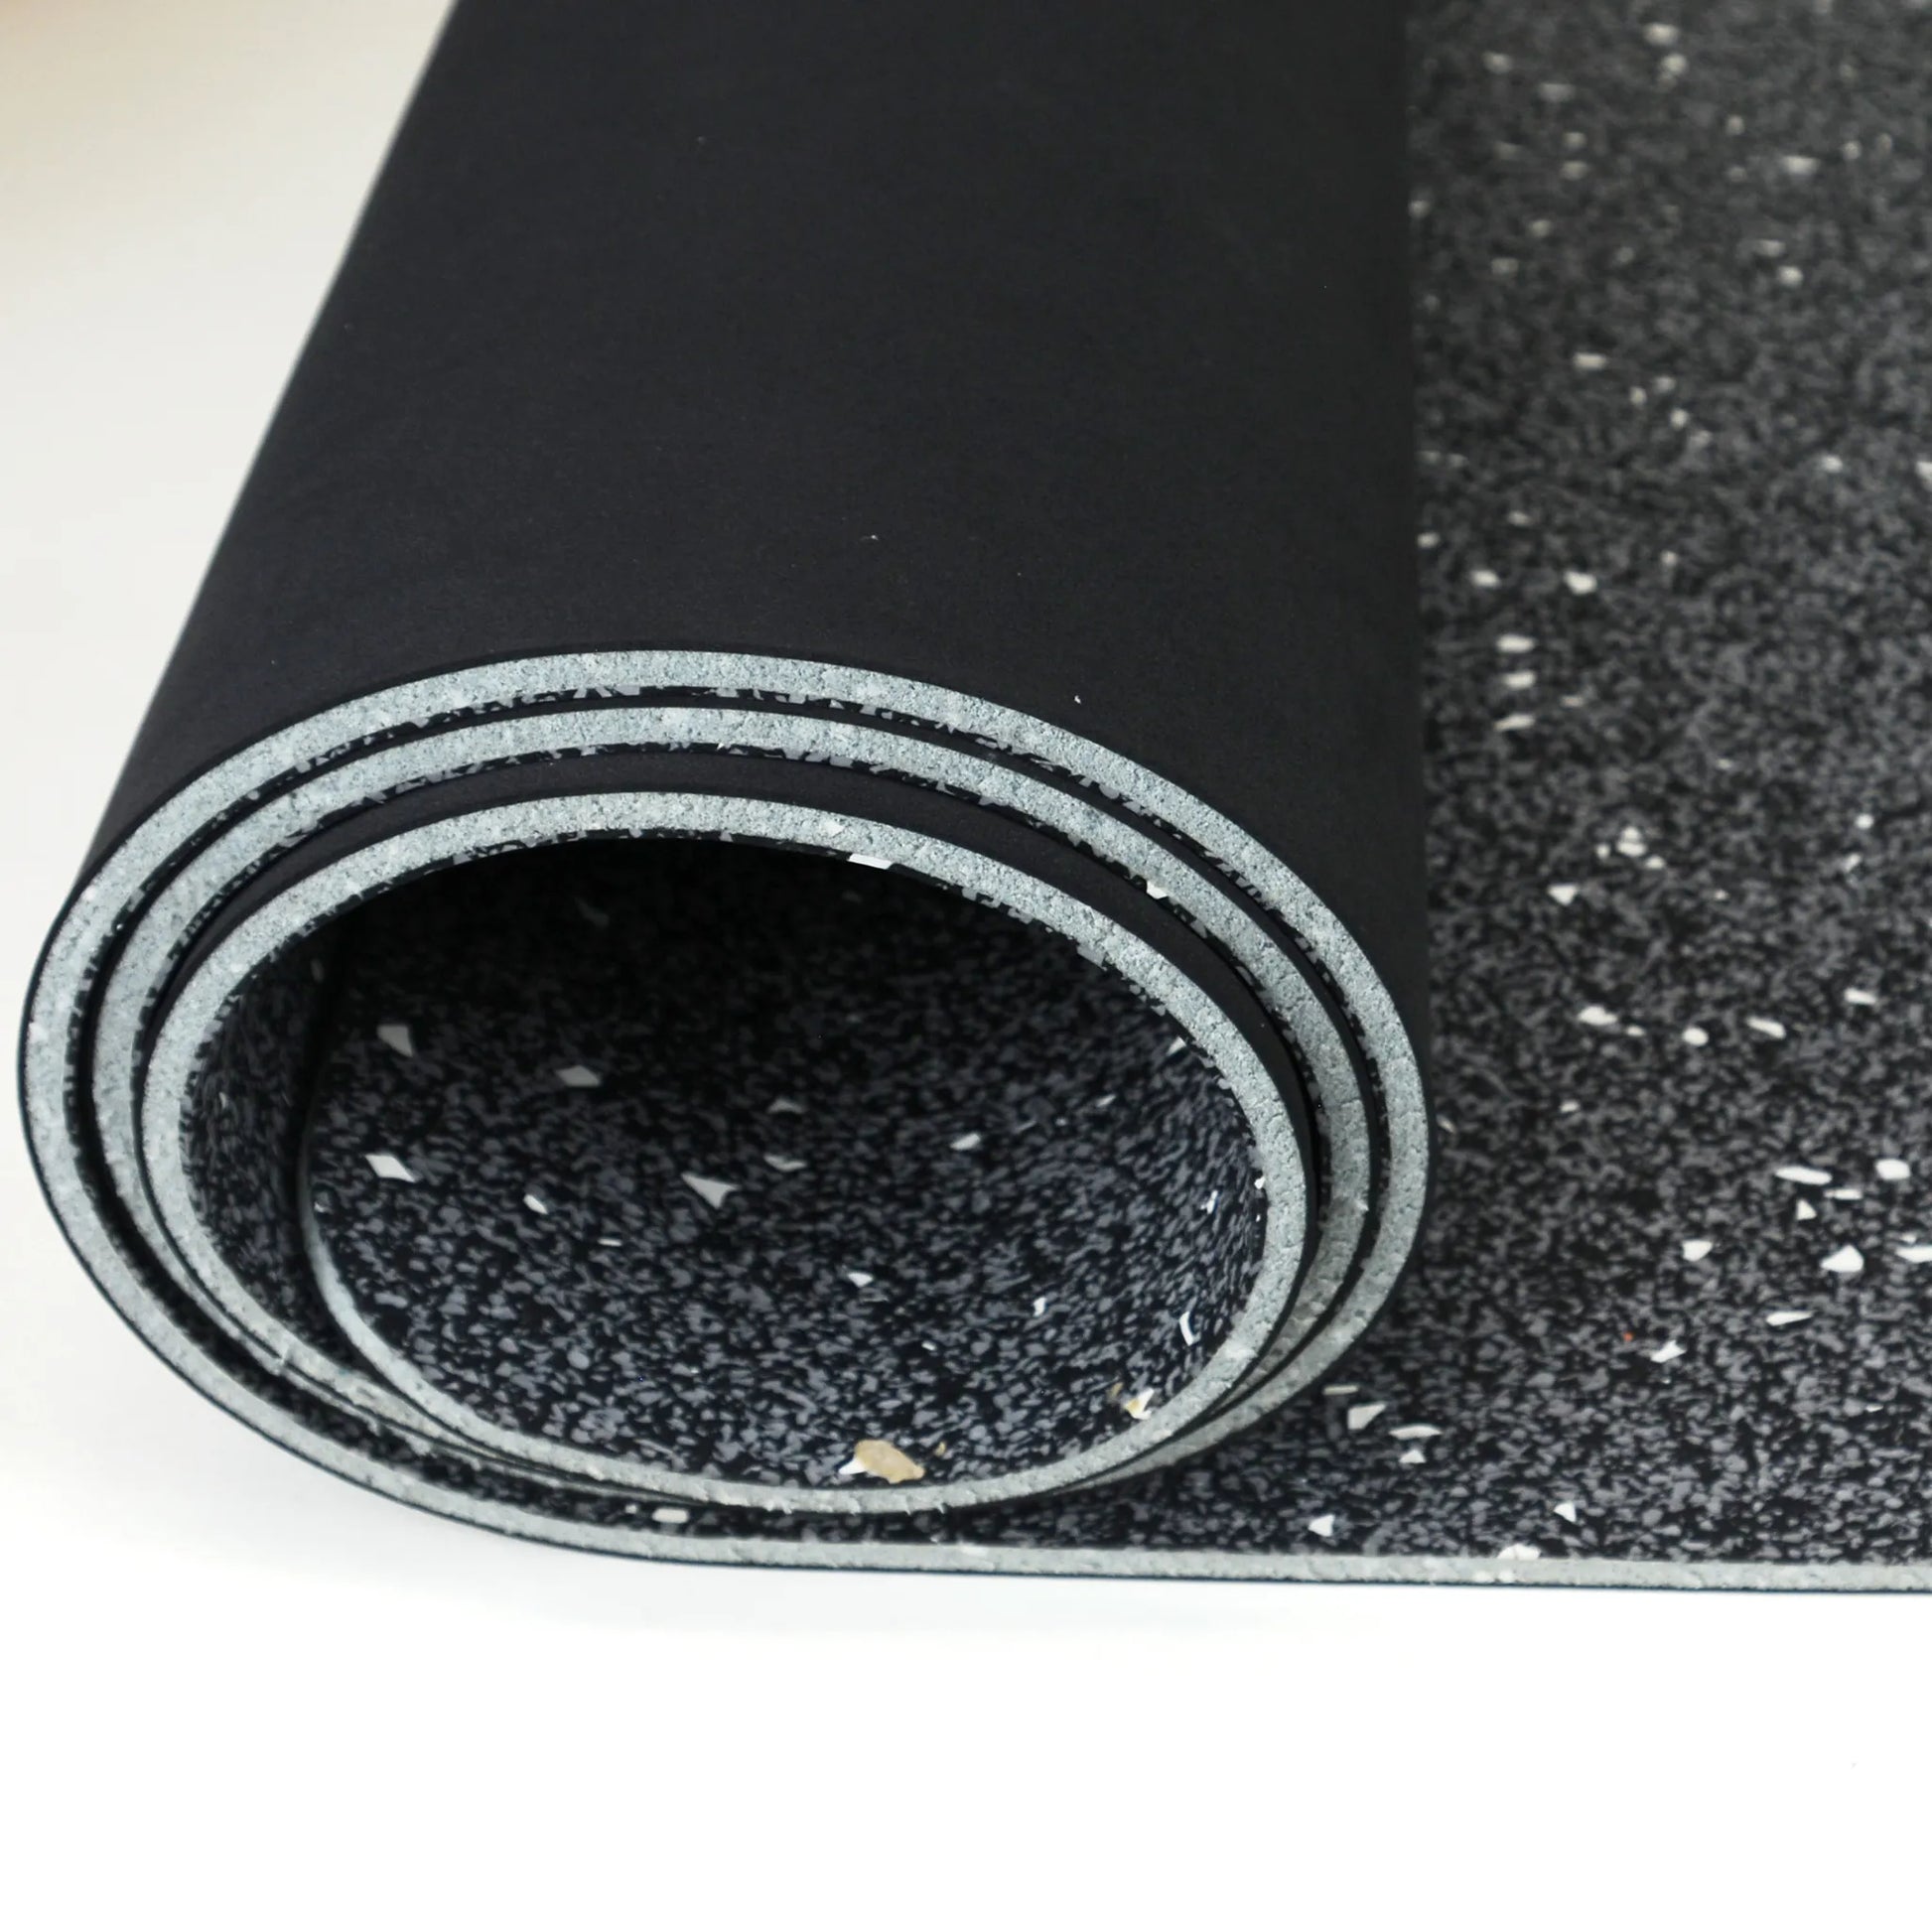 Black yoga mat rolled up.